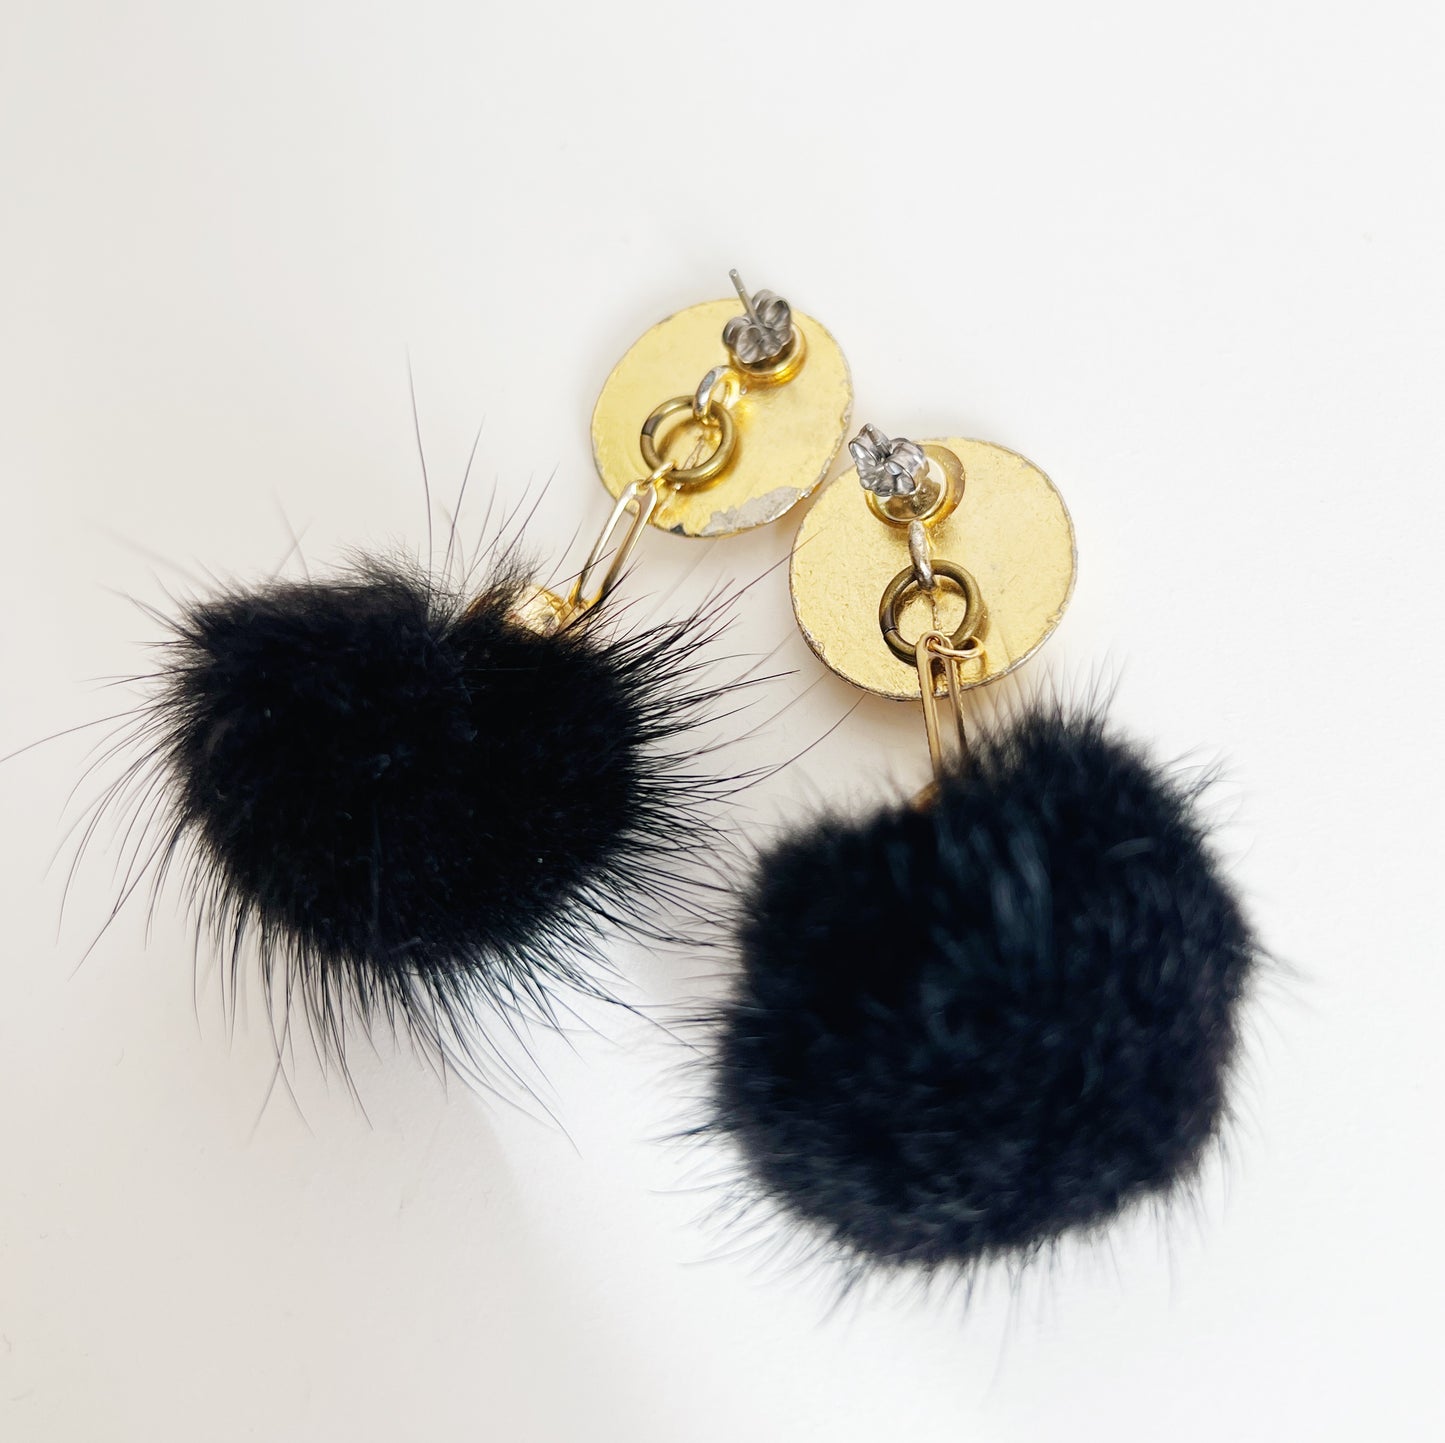 Black fur earrings -pierce type-